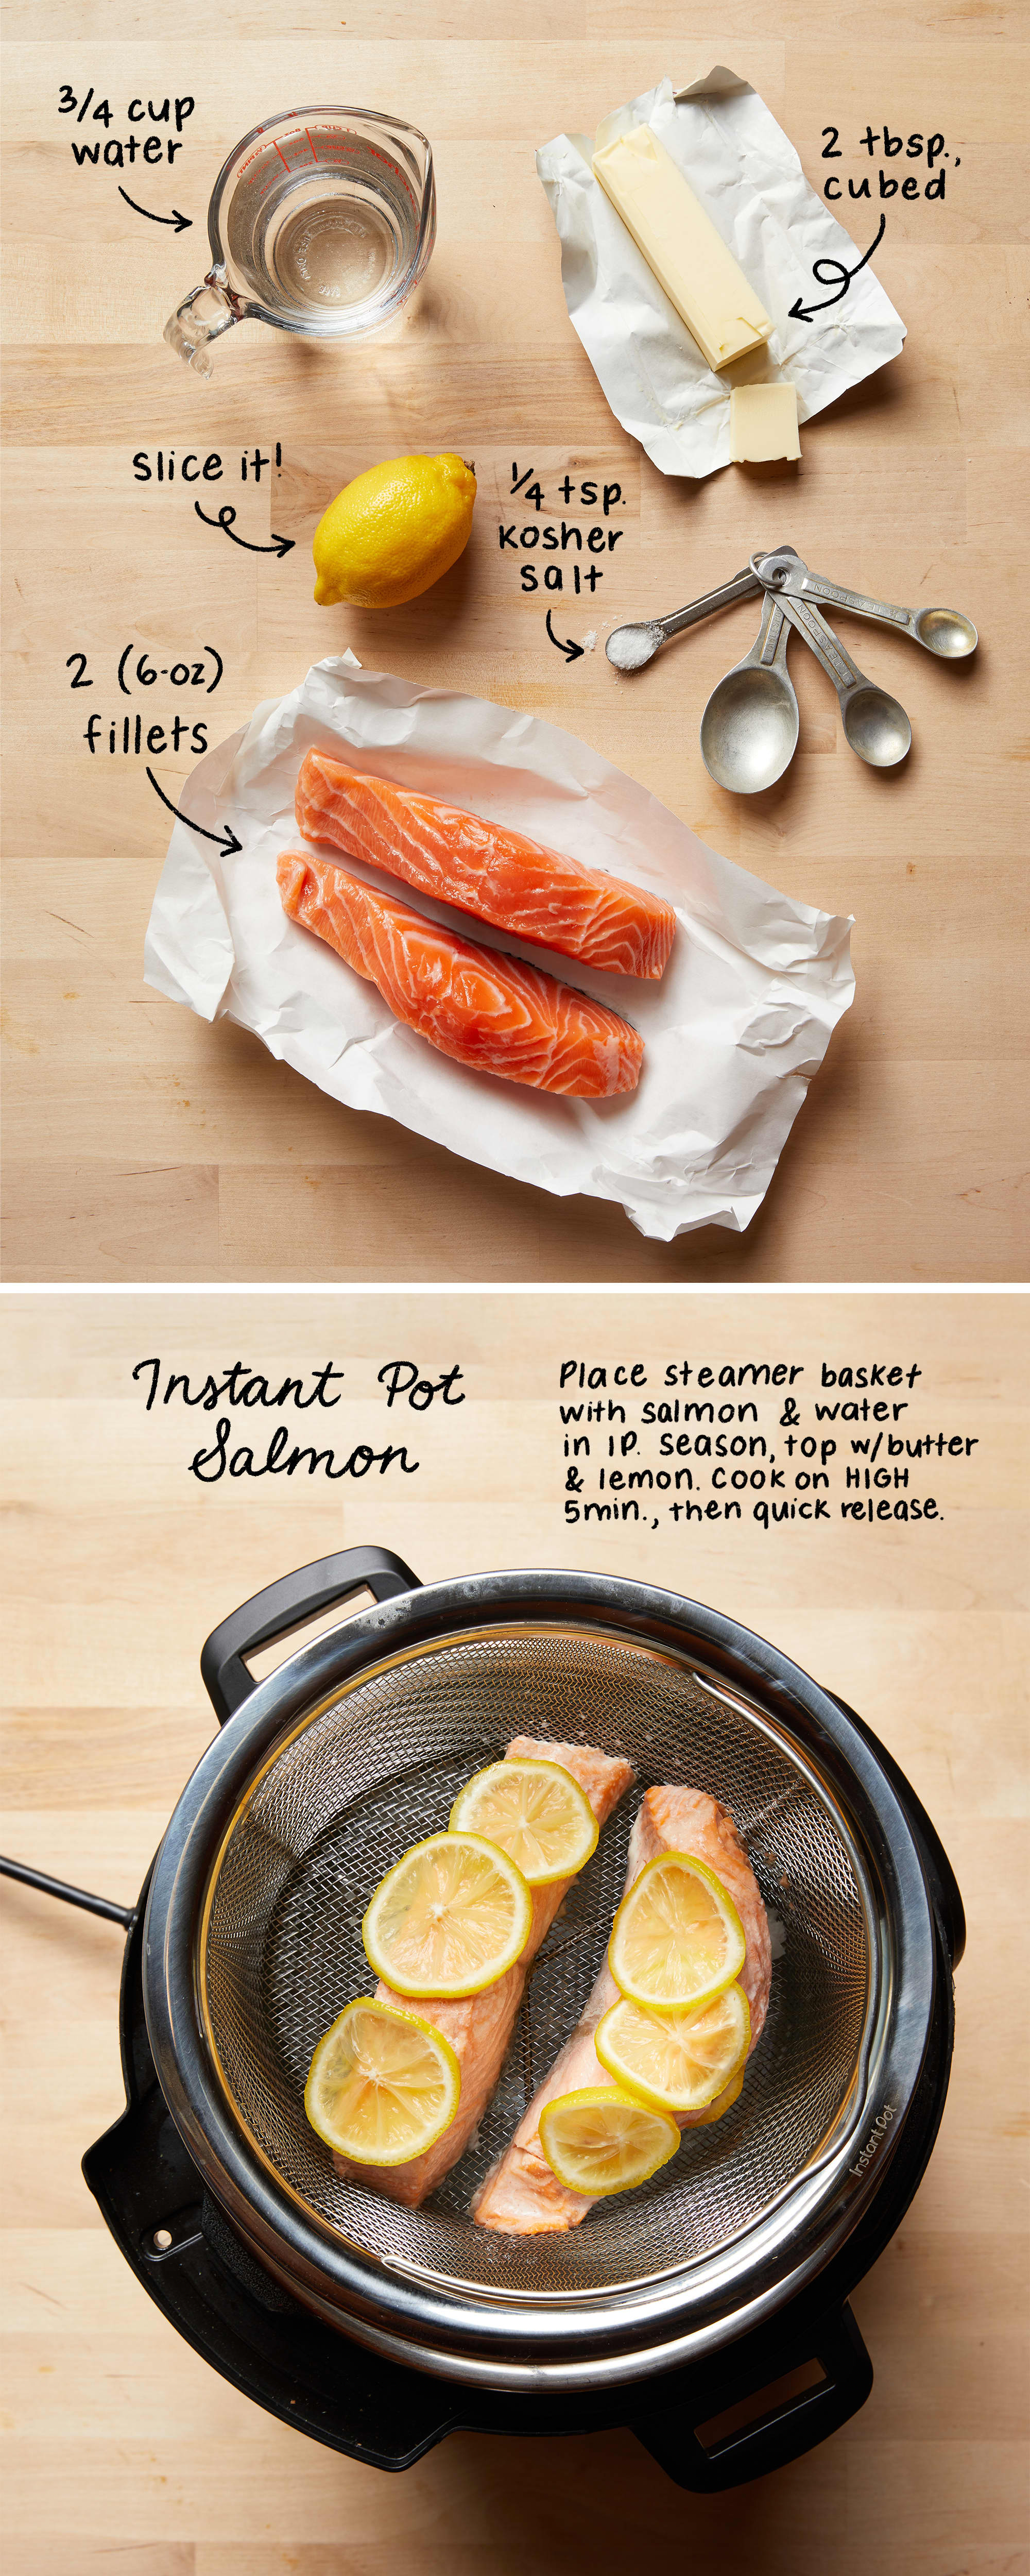 https://cdn.apartmenttherapy.info/image/upload/v1614959401/k/Photo/Series/2021-02-snapshot-cooking-five-ingredient-instant-pot-meals/Instant-Pot-Graphics/snapshot-ip-salmon.jpg